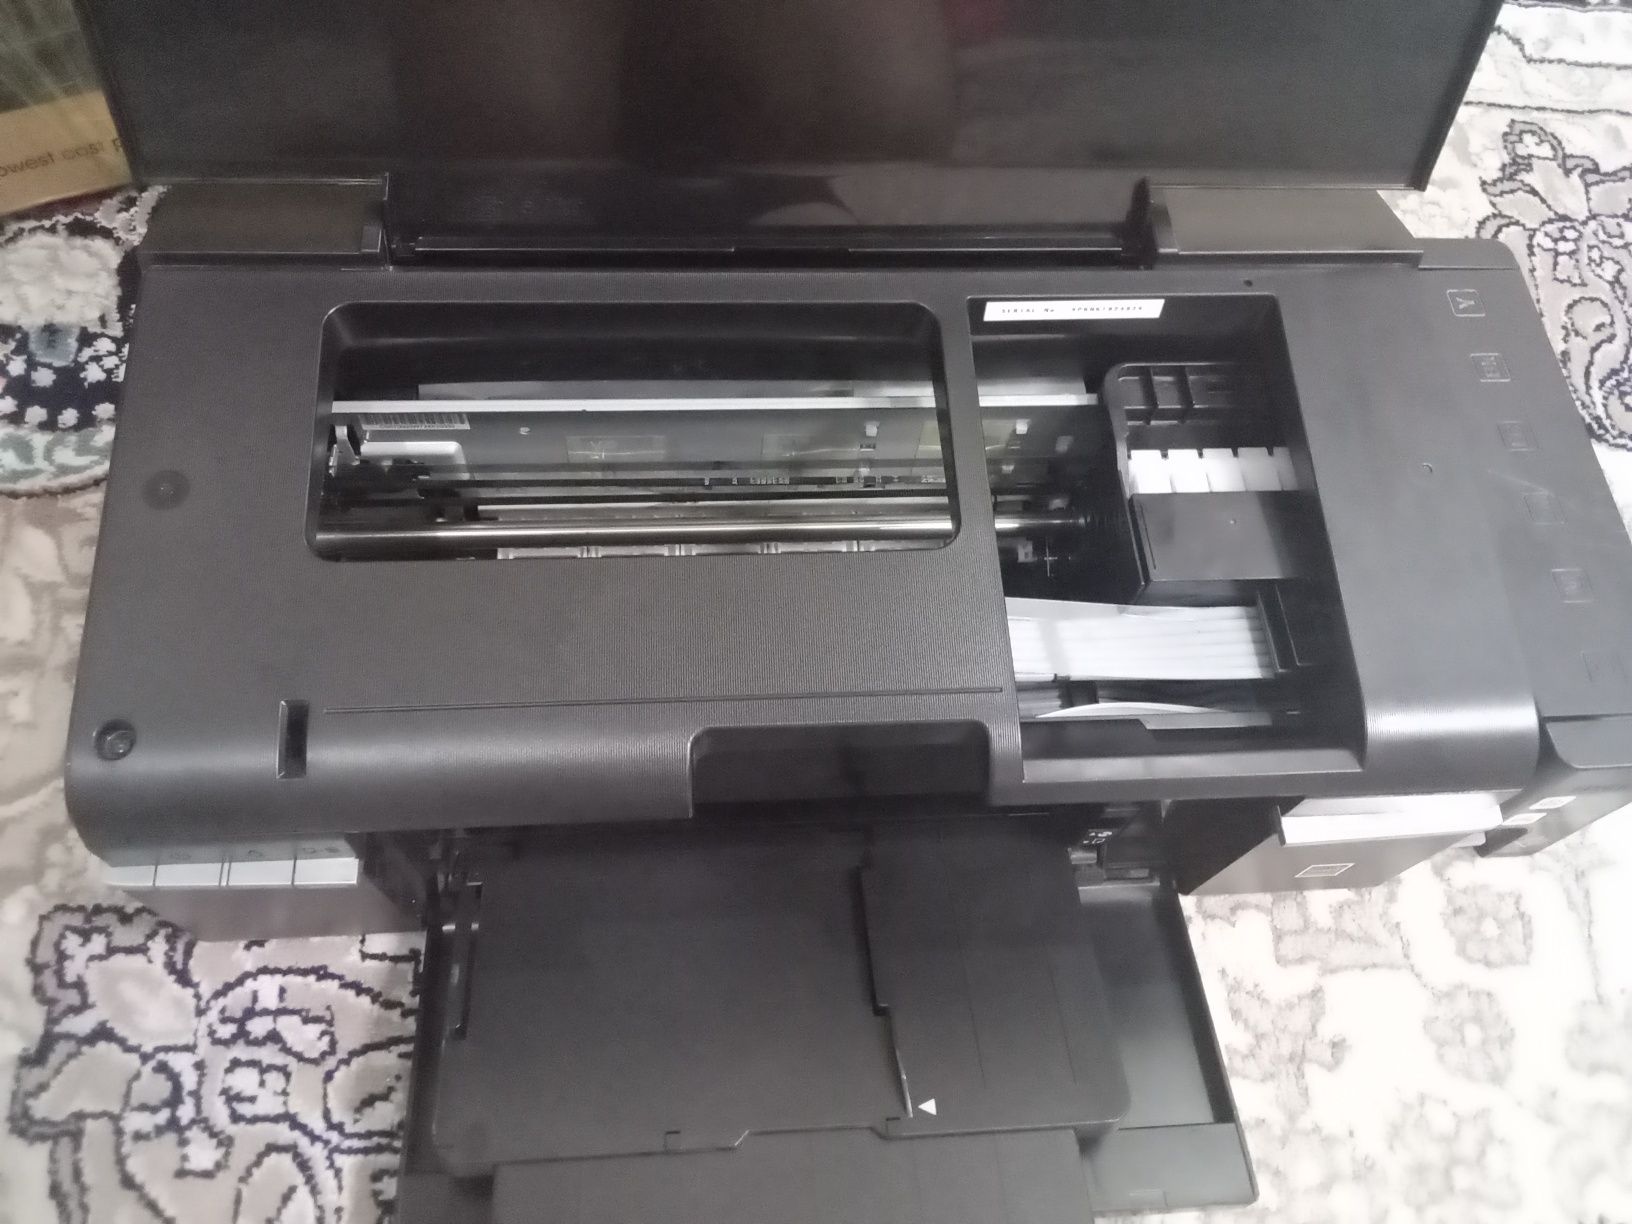 Epson L800 photo printer